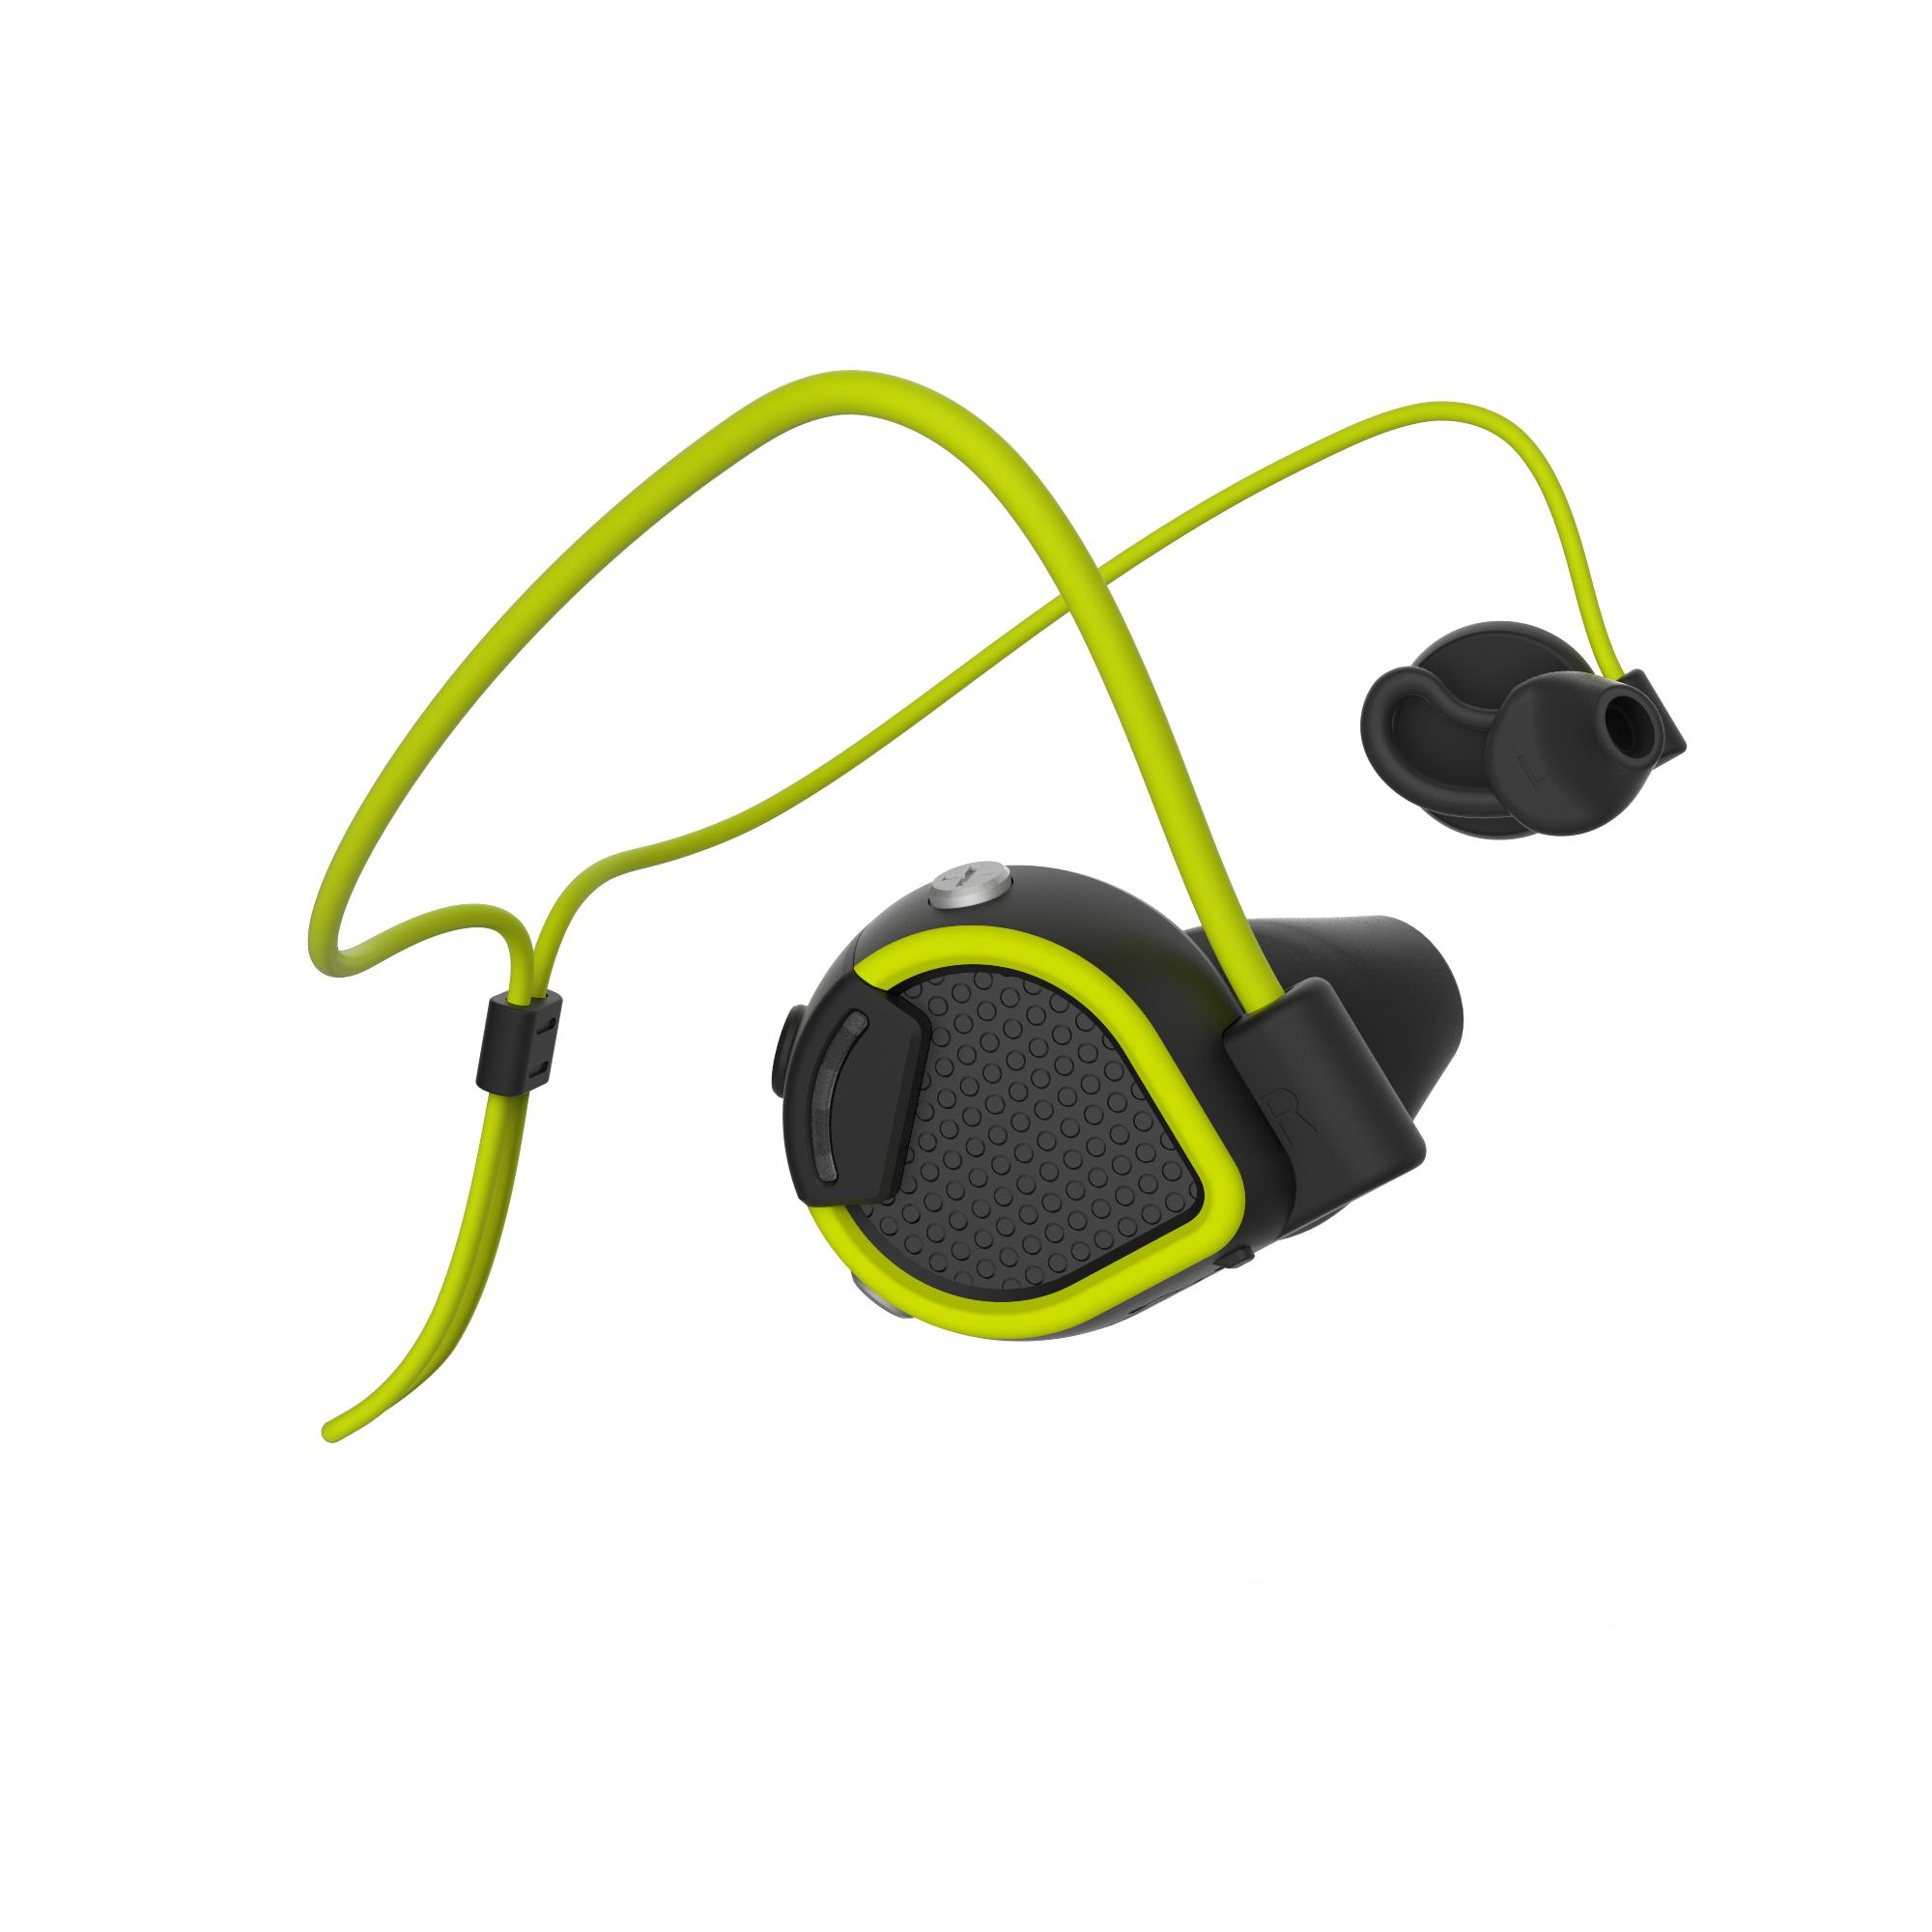 ONear Bluetooth Wireless Sports Earbuds Black Yellow 1/10